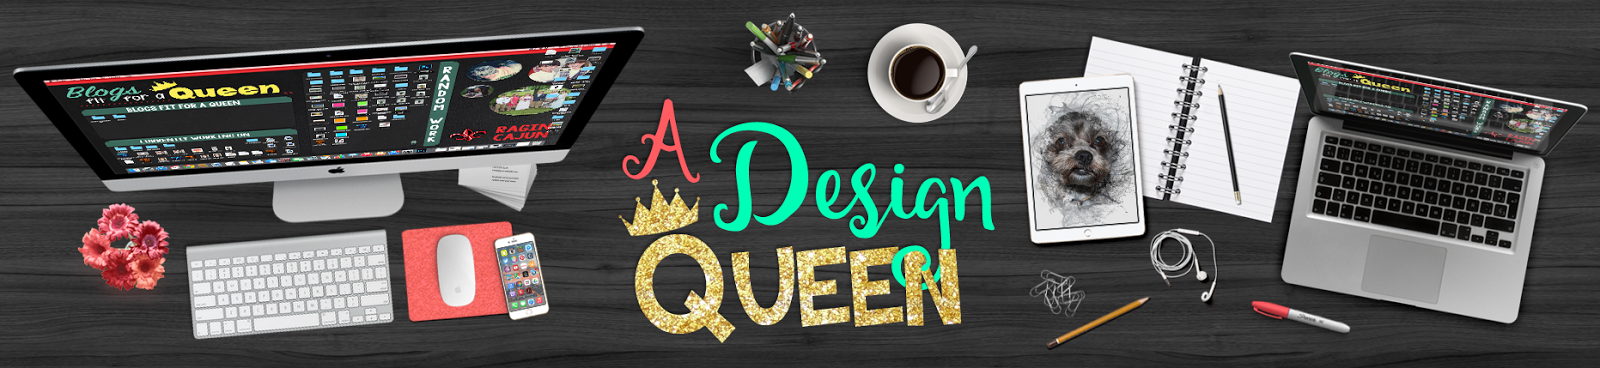 The Design Queens